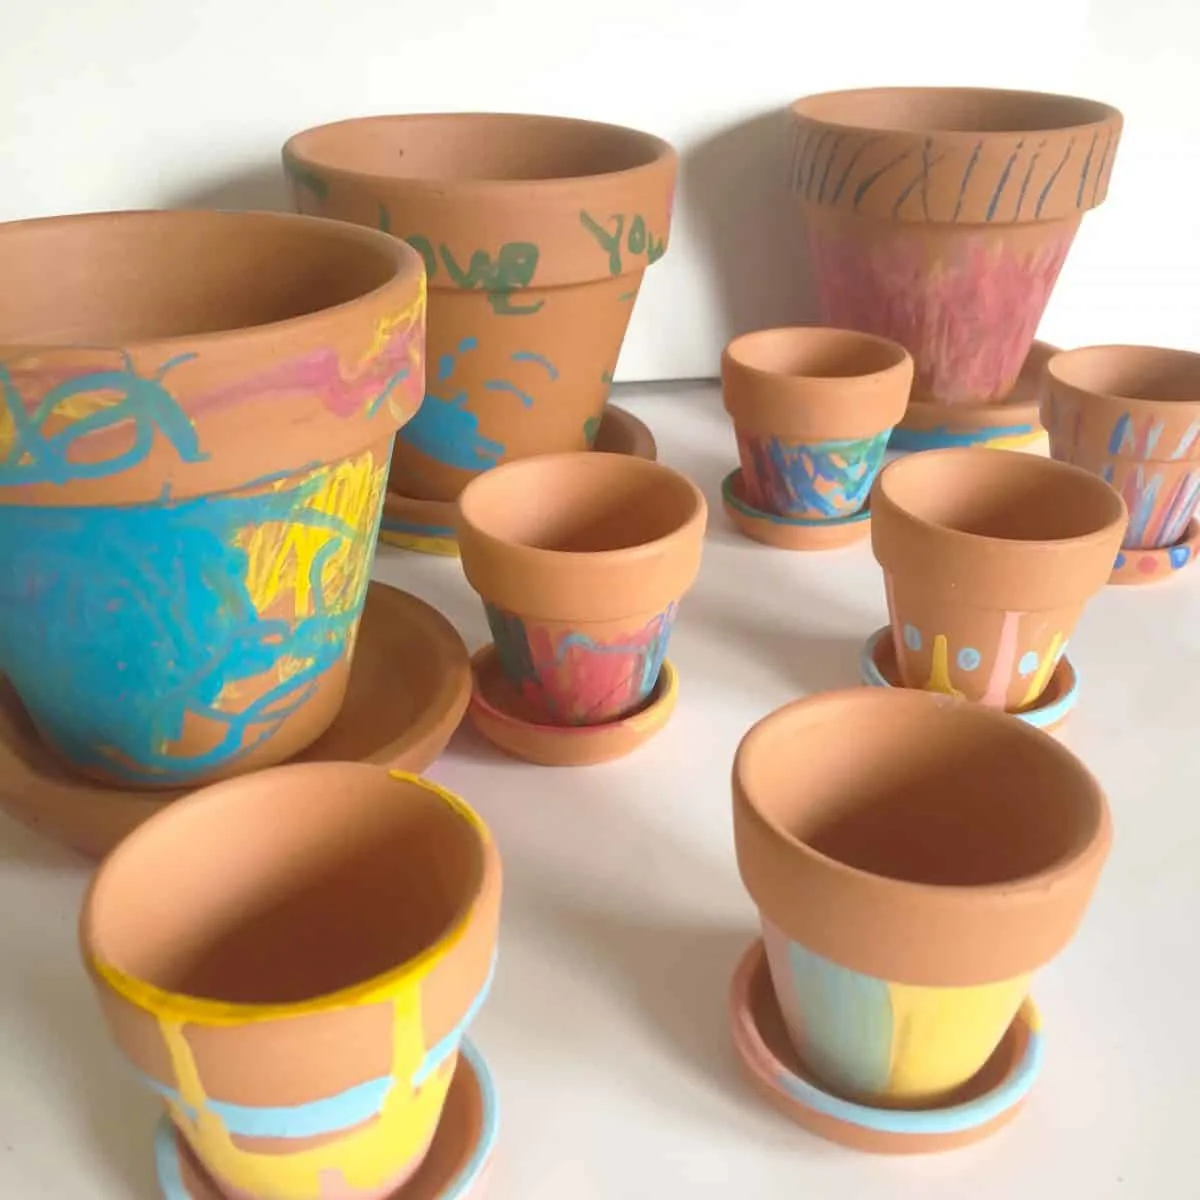 jacraftne arts and crafts for kids ages 8-12 - crafts for girls